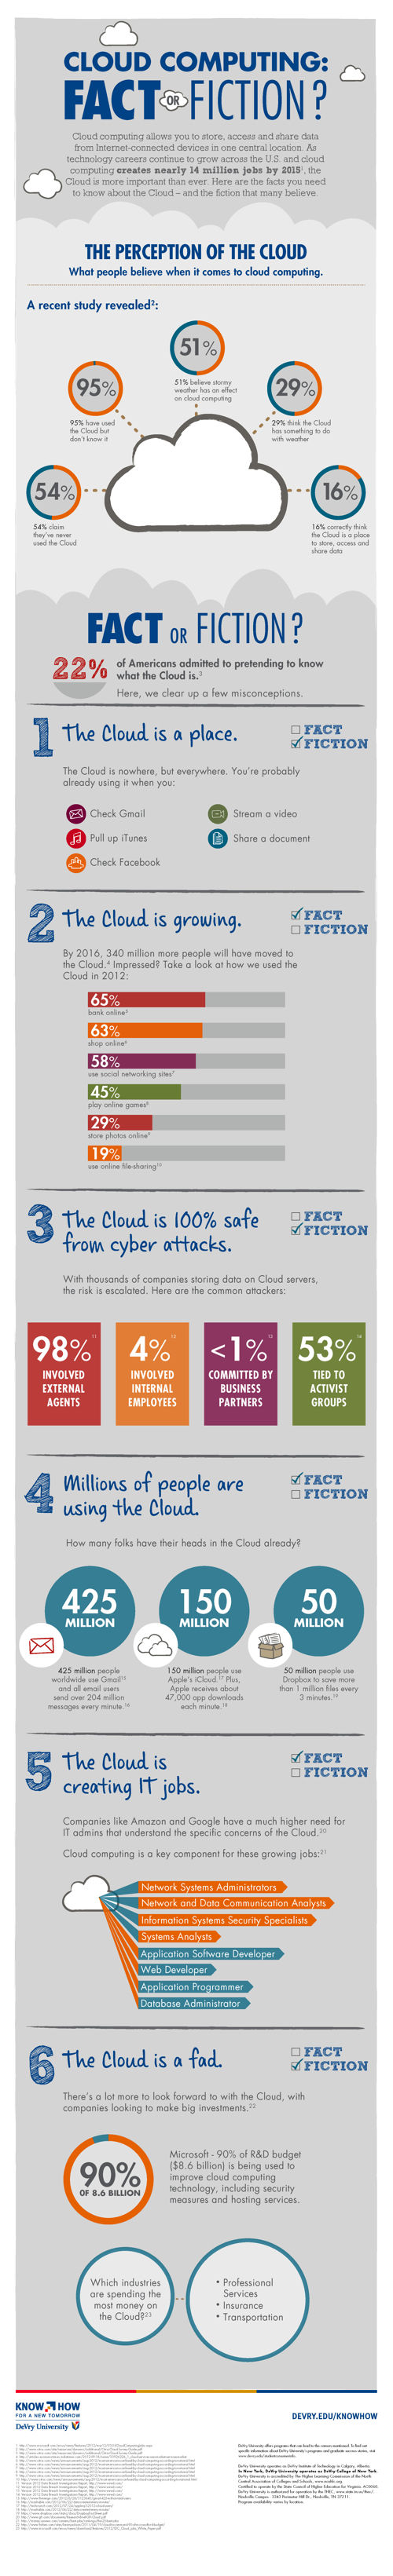 cloud-computing-fact-or-fiction.jpg